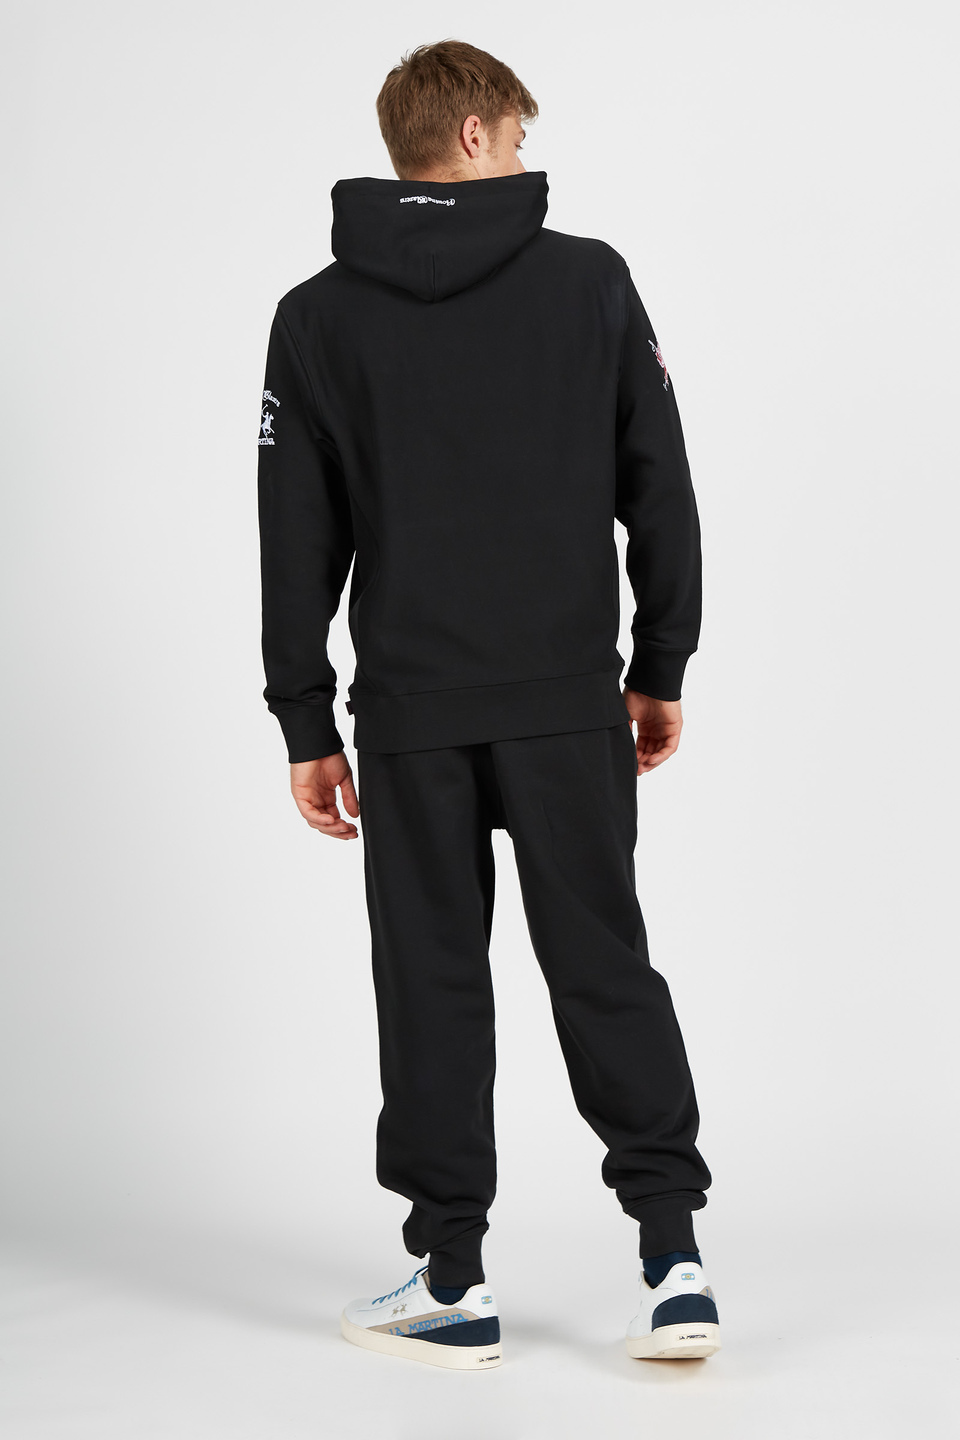 Comfort fit hooded sweatshirt | La Martina - Official Online Shop